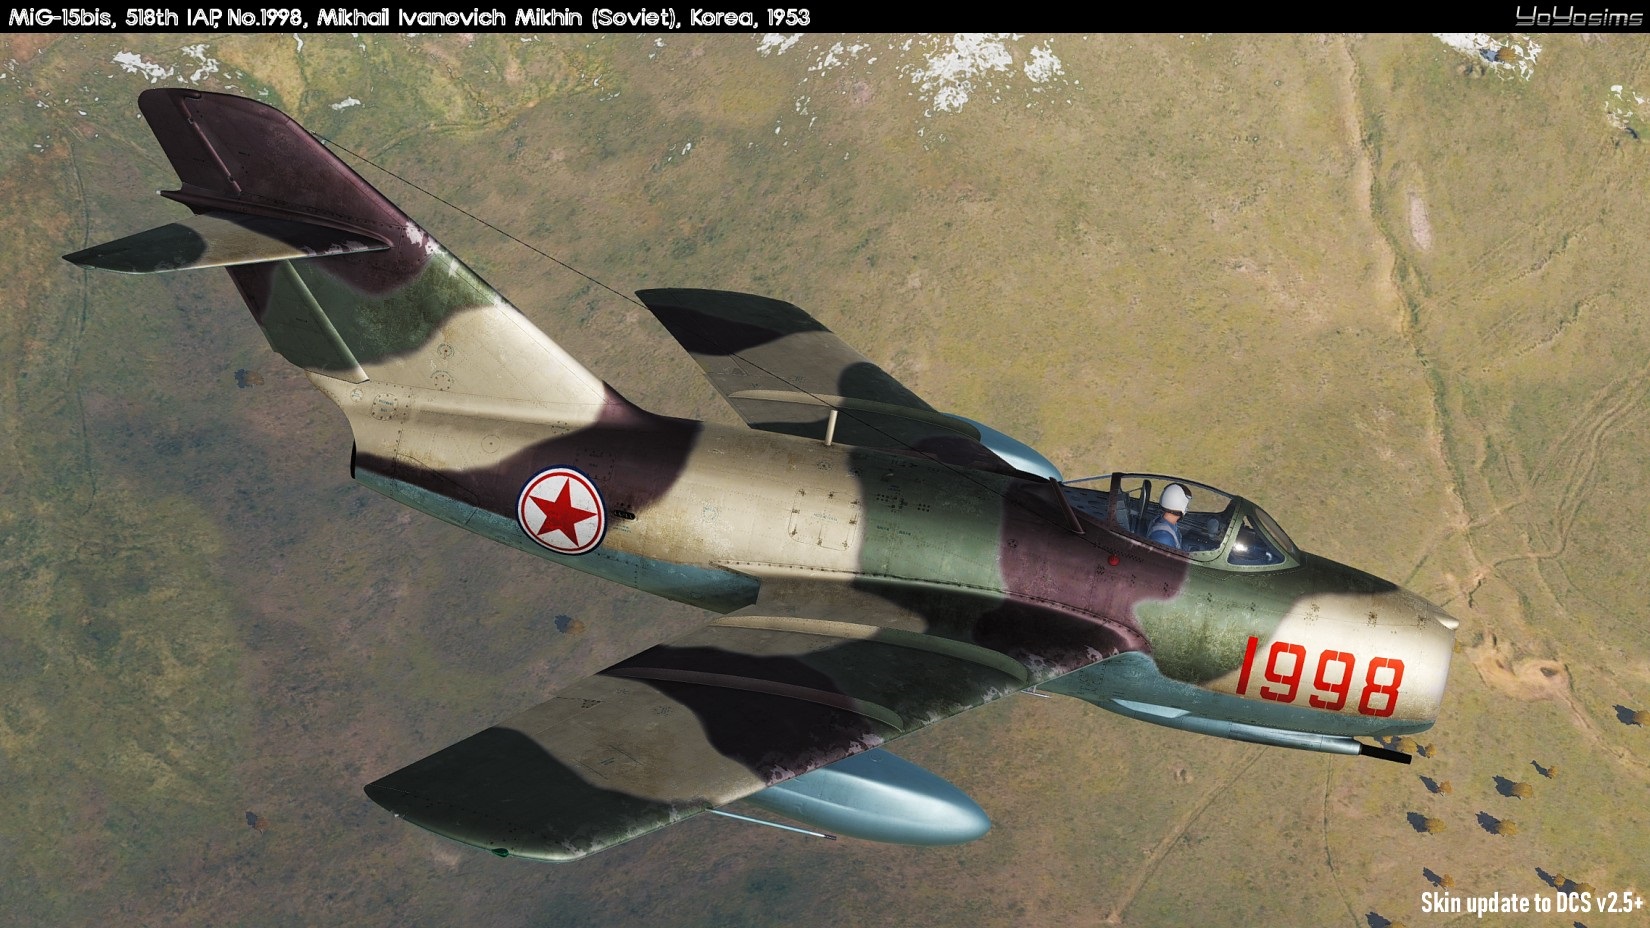 MiG-15bis, Korea, M.I.Mikhin, No.1998